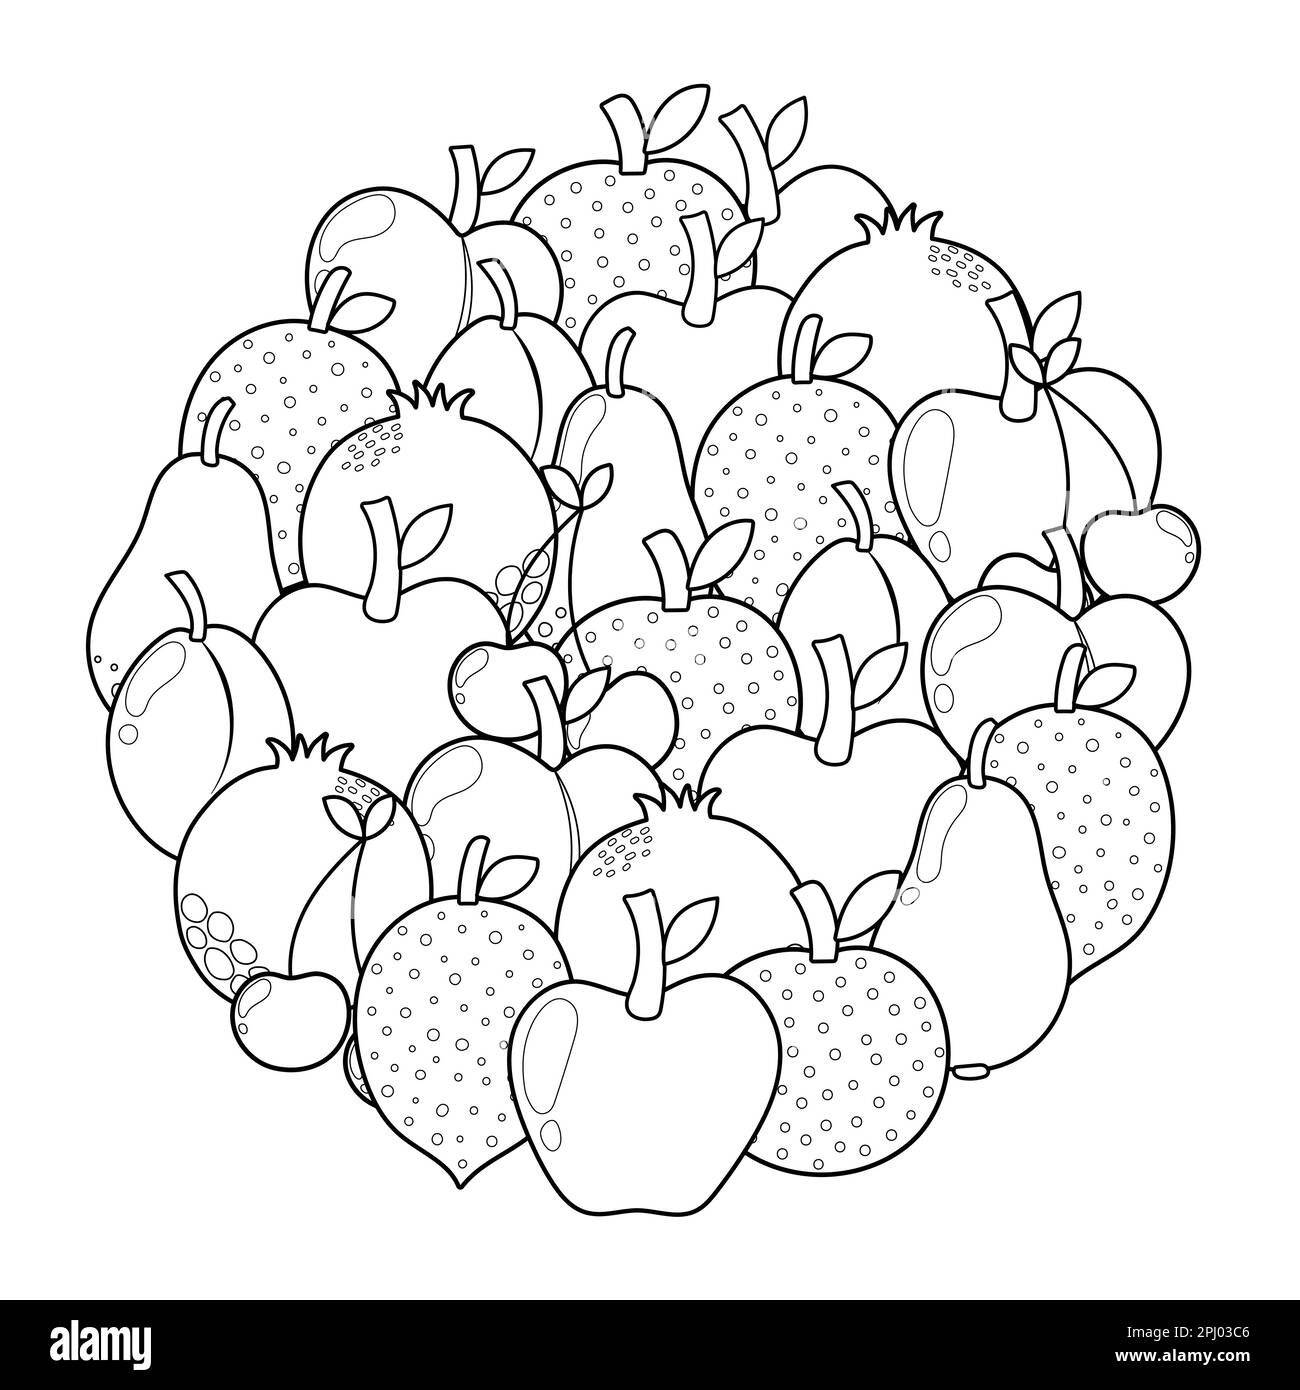 Doodle fruits circle shape coloring page. Mandala with apples, lemon Stock Vector